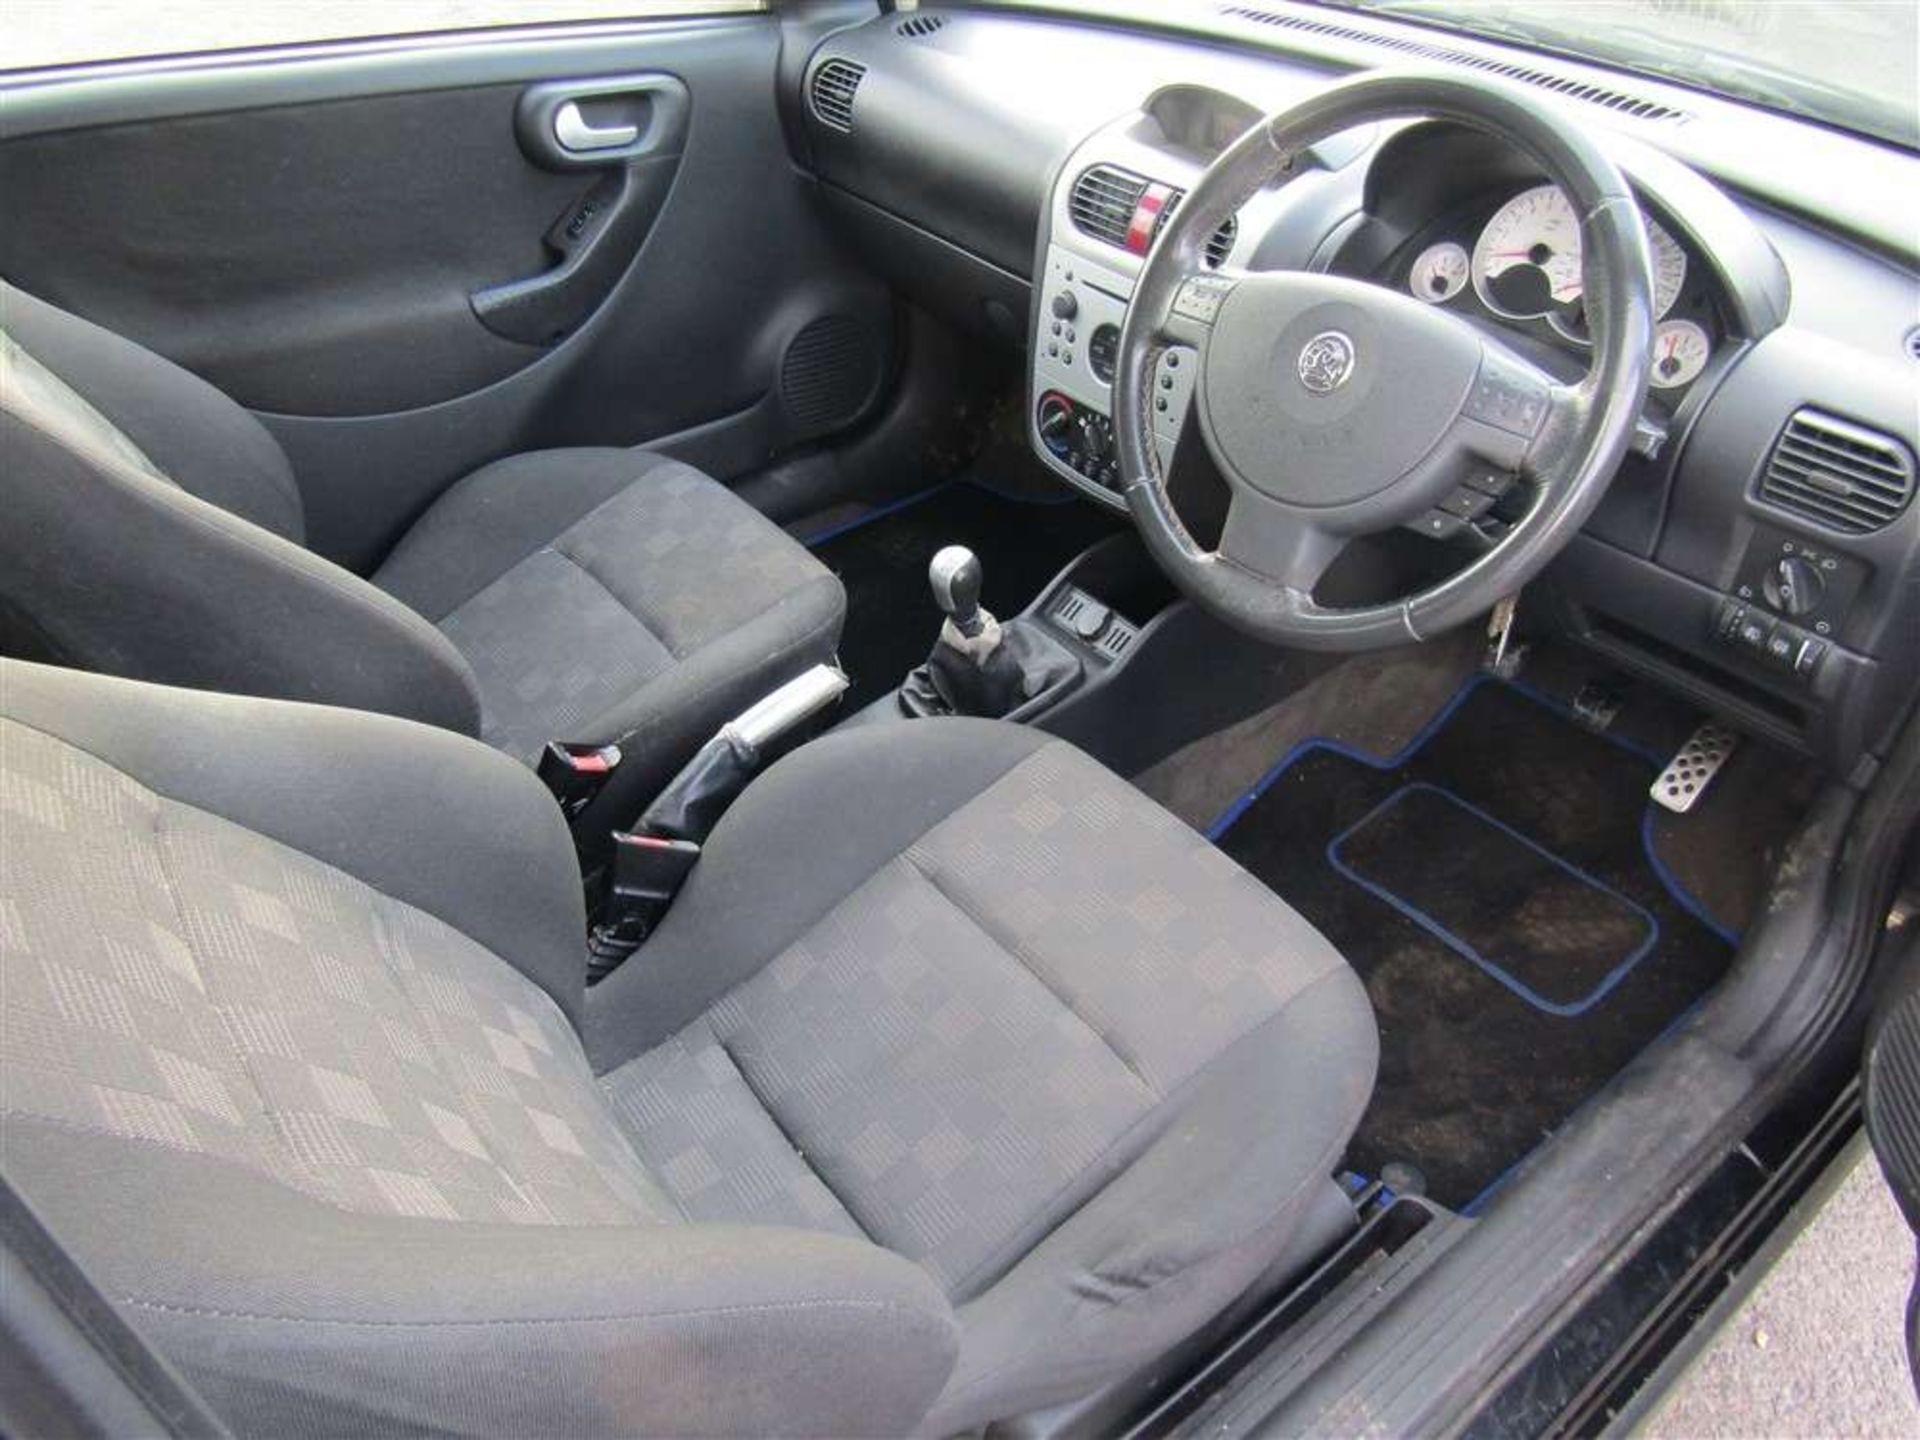 2004 Vauxhall Corsa SRI 16v Twinport - Image 5 of 6